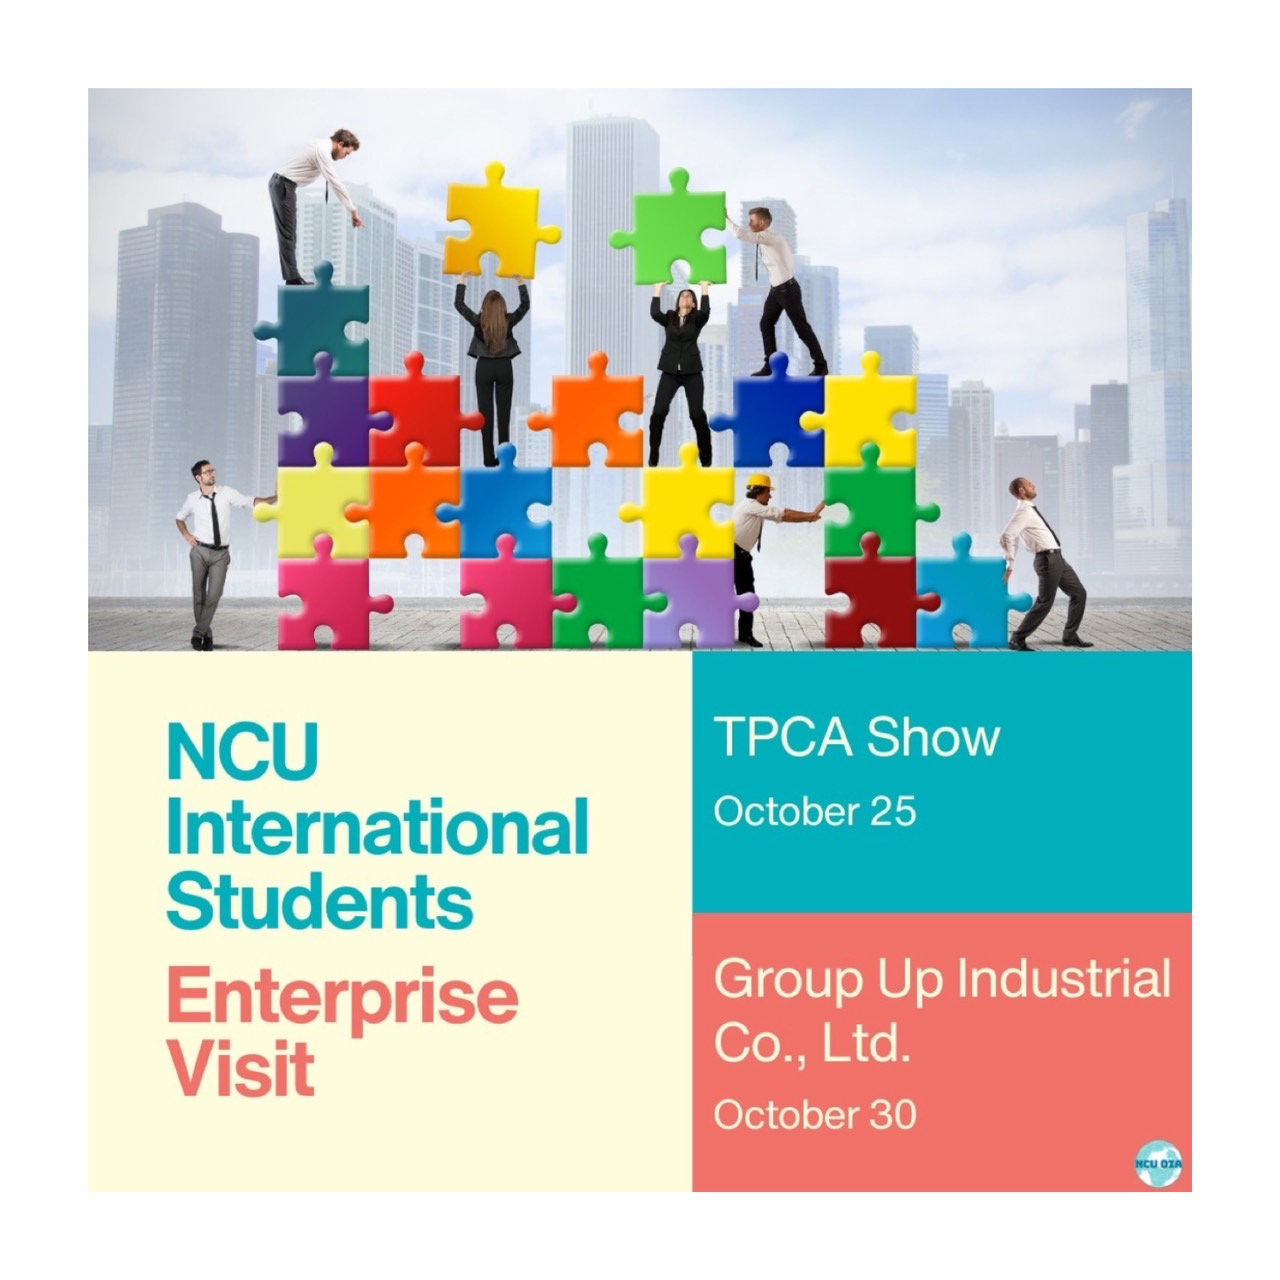 Enterprise Visit - TPCA Show and GROUP UP INDUSTRIAL CO., LTD. (2)